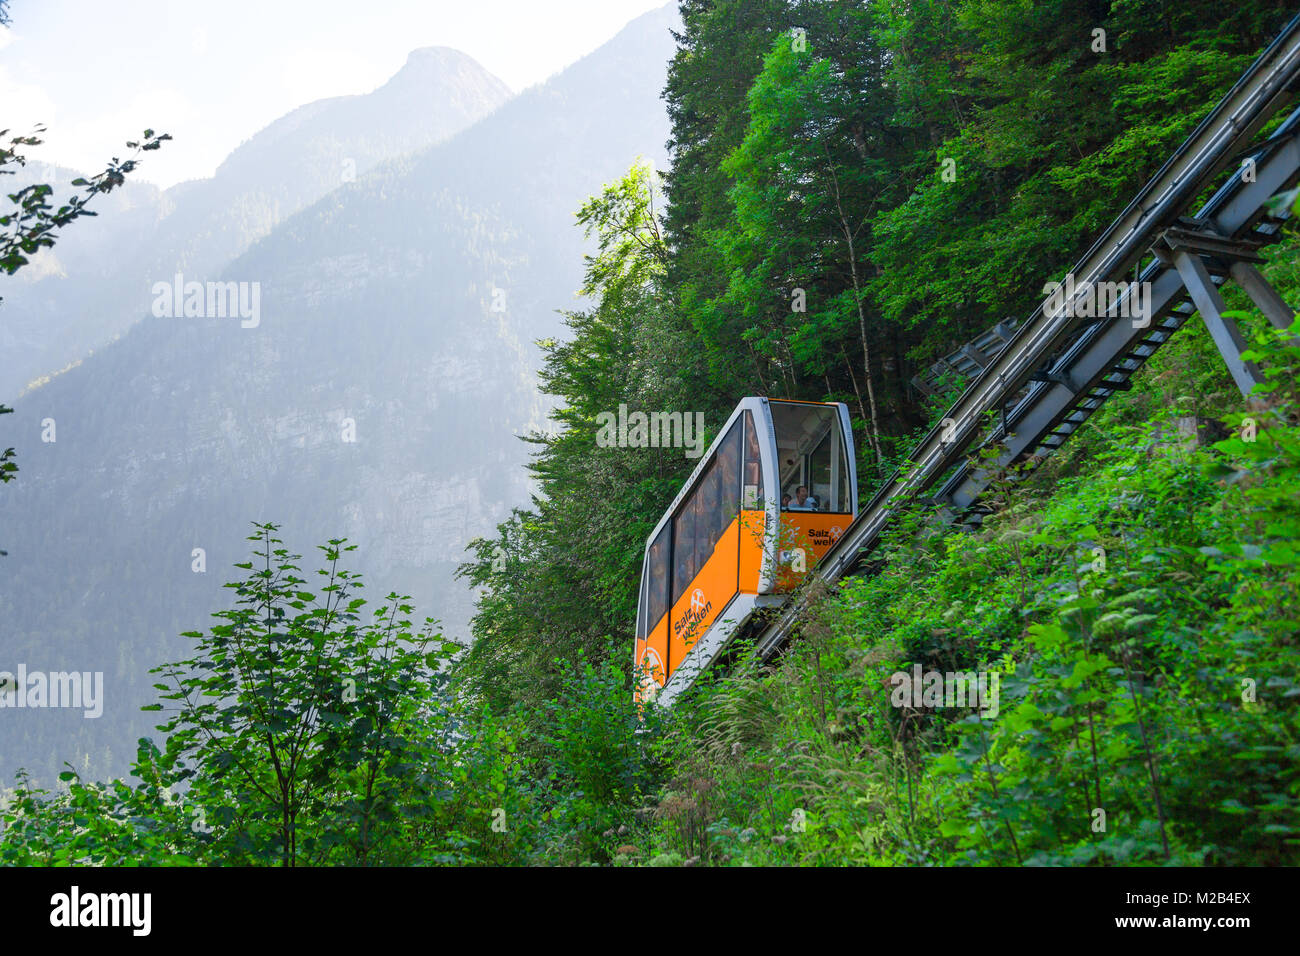 HALLSTATT, Austria - 14 settembre 2016 : Cavo collegamento ferroviario fra Hallstatt e Salzberg picco in Austria le montagne del Salzkammergut. Foto Stock